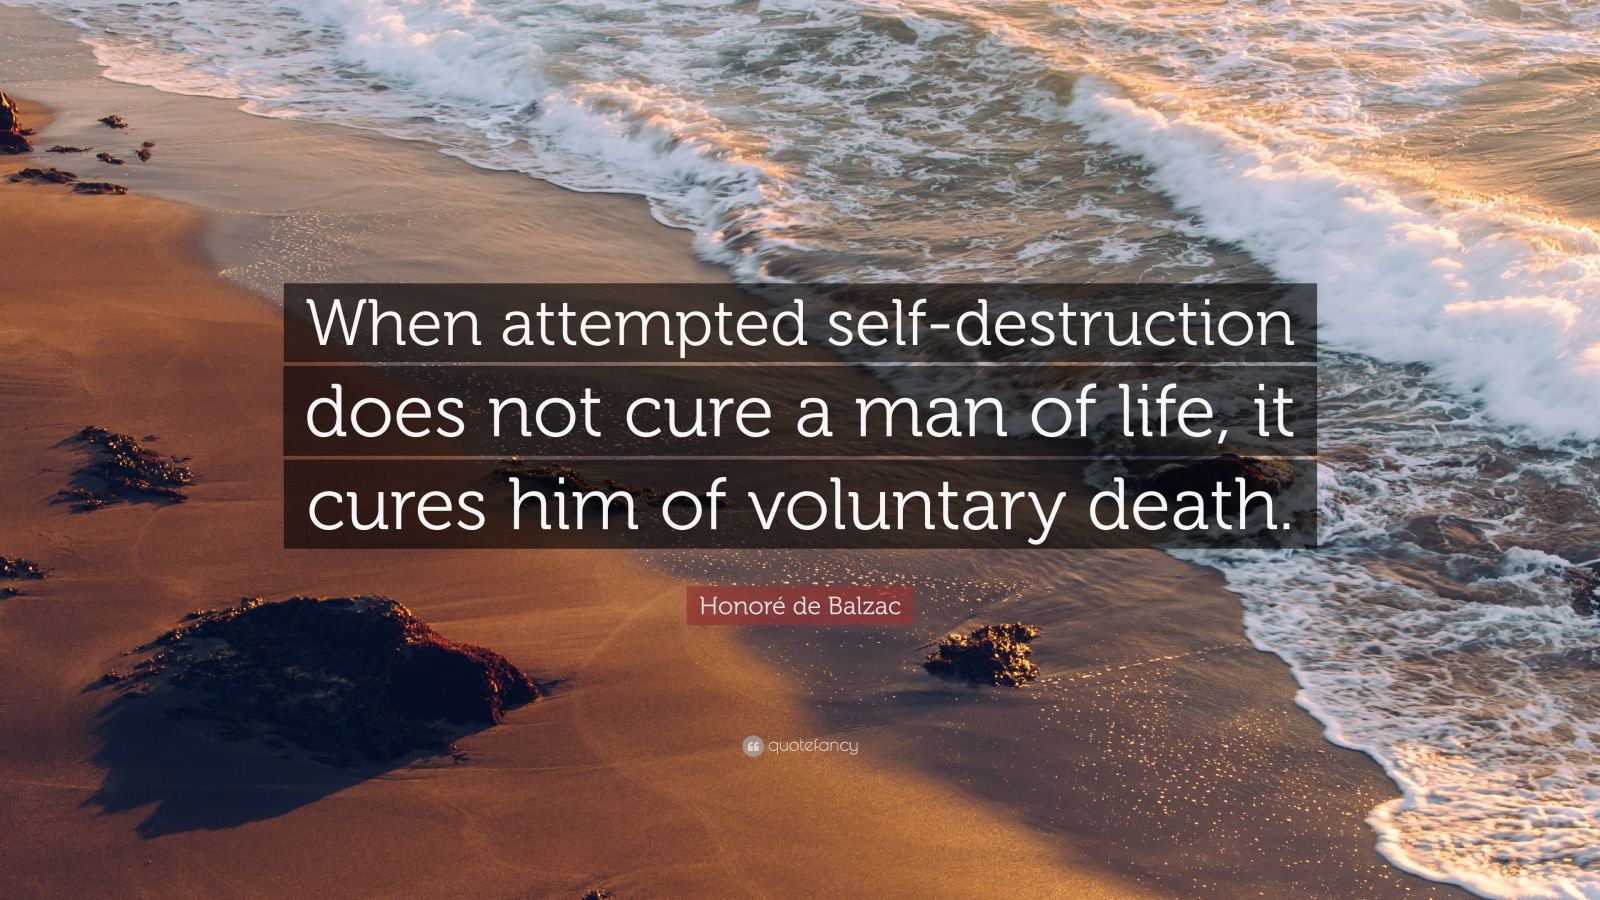 Honoré de Balzac Quote: “When attempted self-destruction does not cure a man of ...1600 x 900